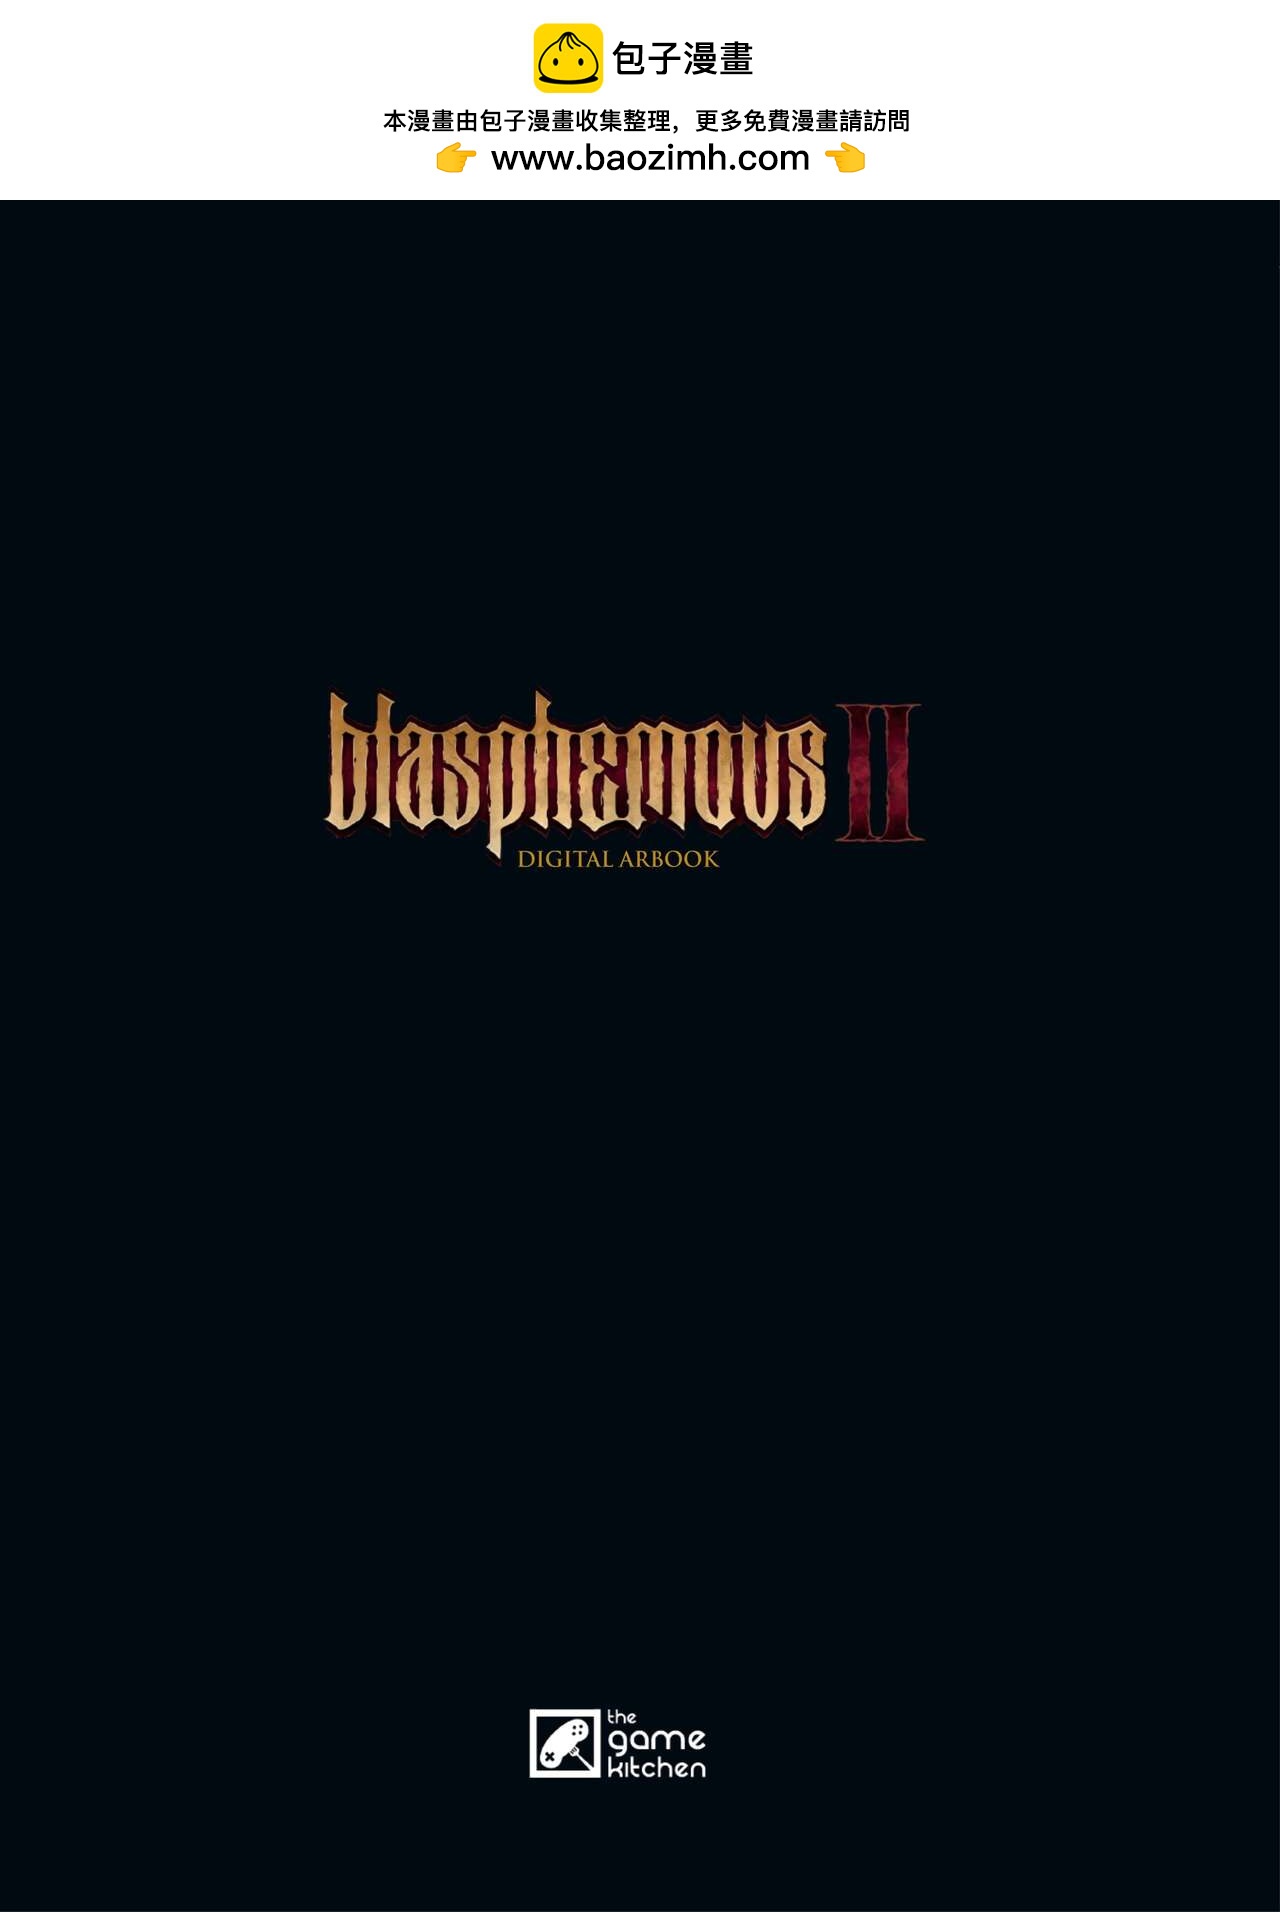 BlasphemousⅡ Digital Artbook - 全一卷(1/2) - 2